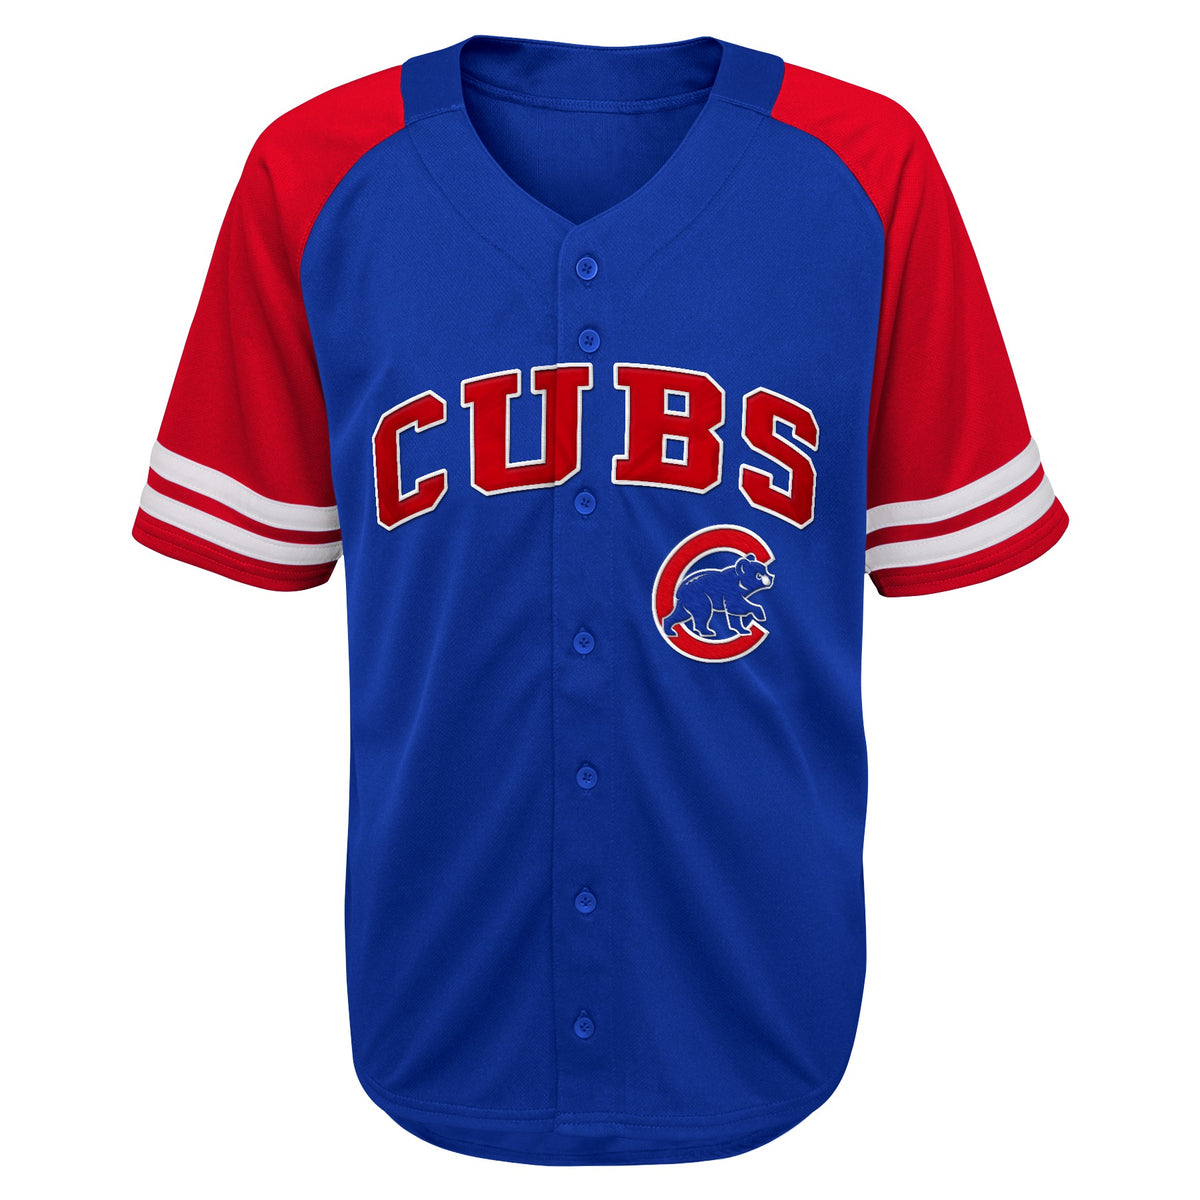 Outerstuff MLB Kids Chicago Cubs Button Up Baseball Team Home